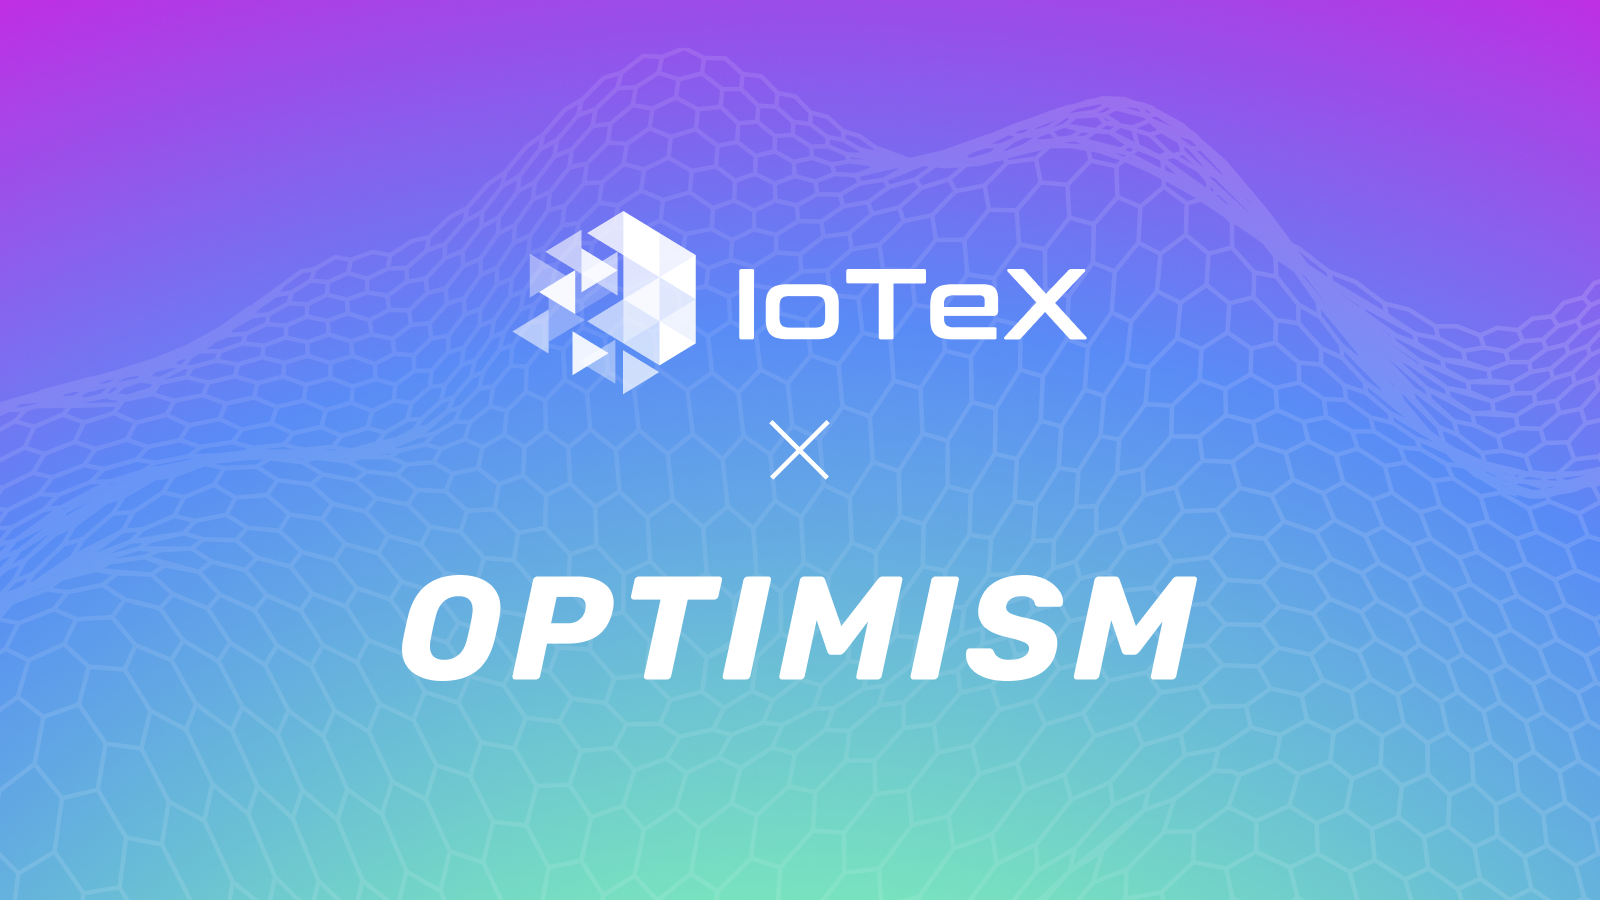 IoTeX's W3bstream Integrates Optimism: Expanding the DePIN Ecosystem